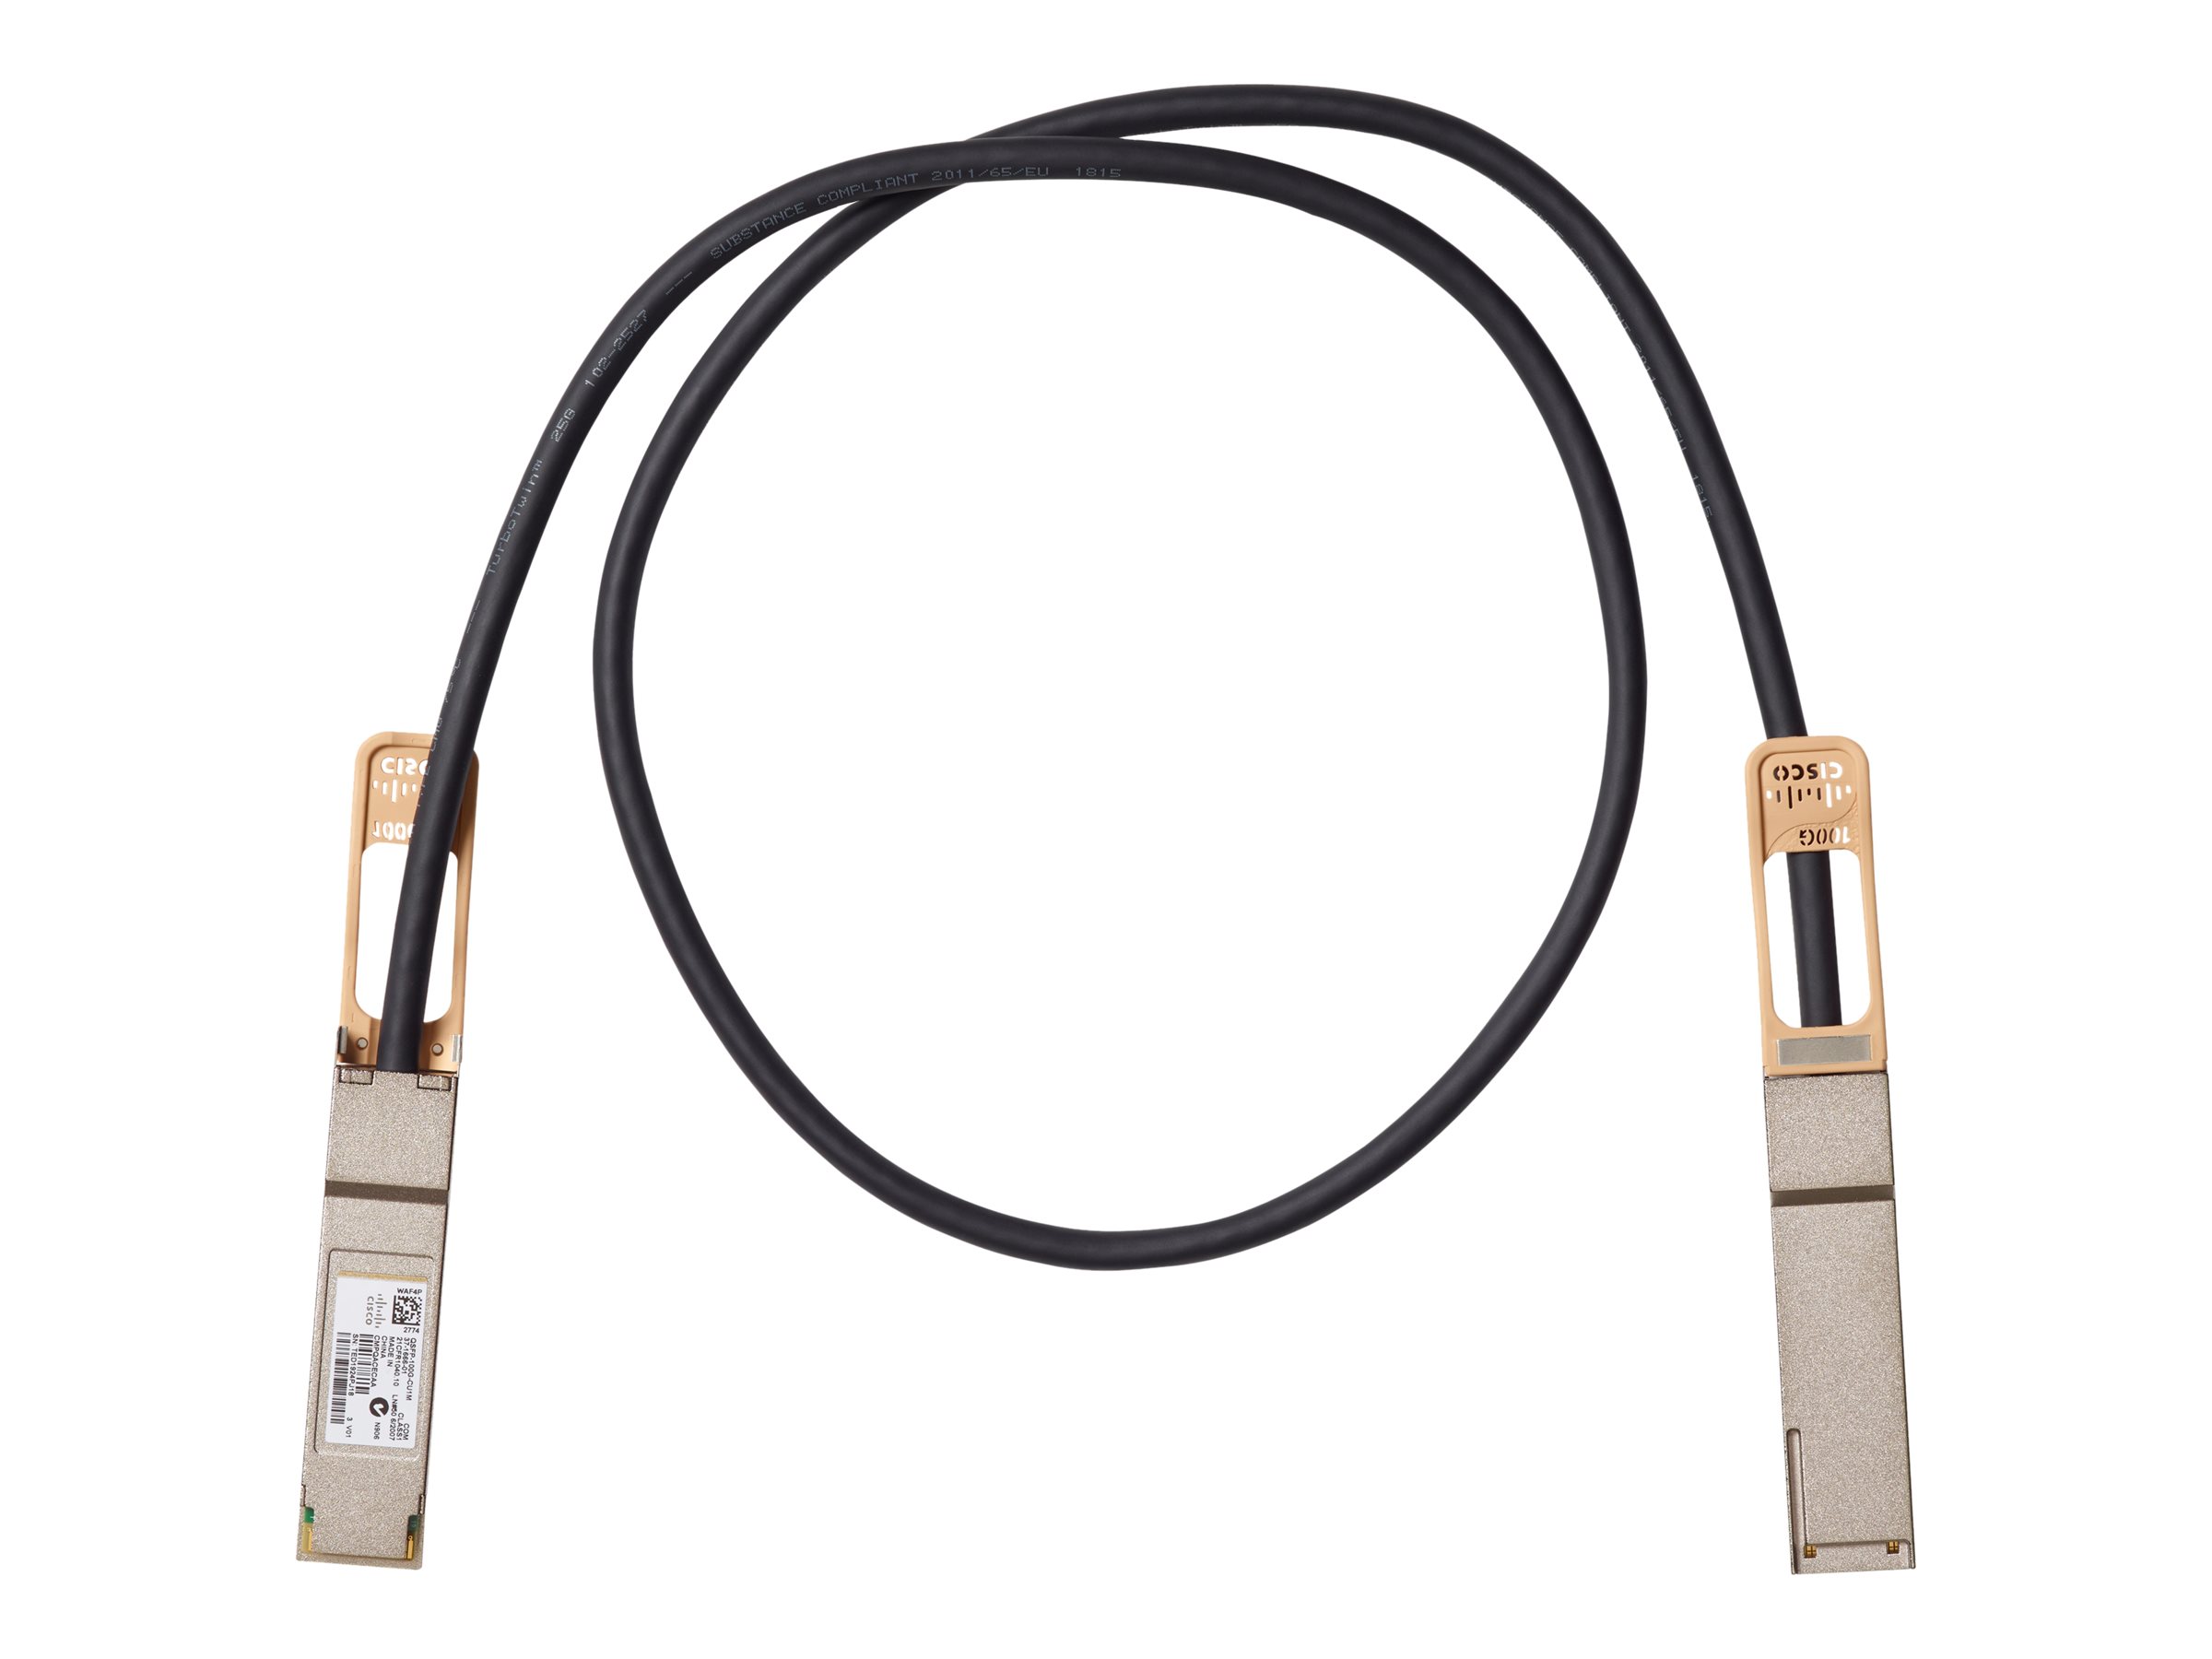 Cisco Copper Cable - 100GBase-CR4 Kabel zum direkten Anbringen